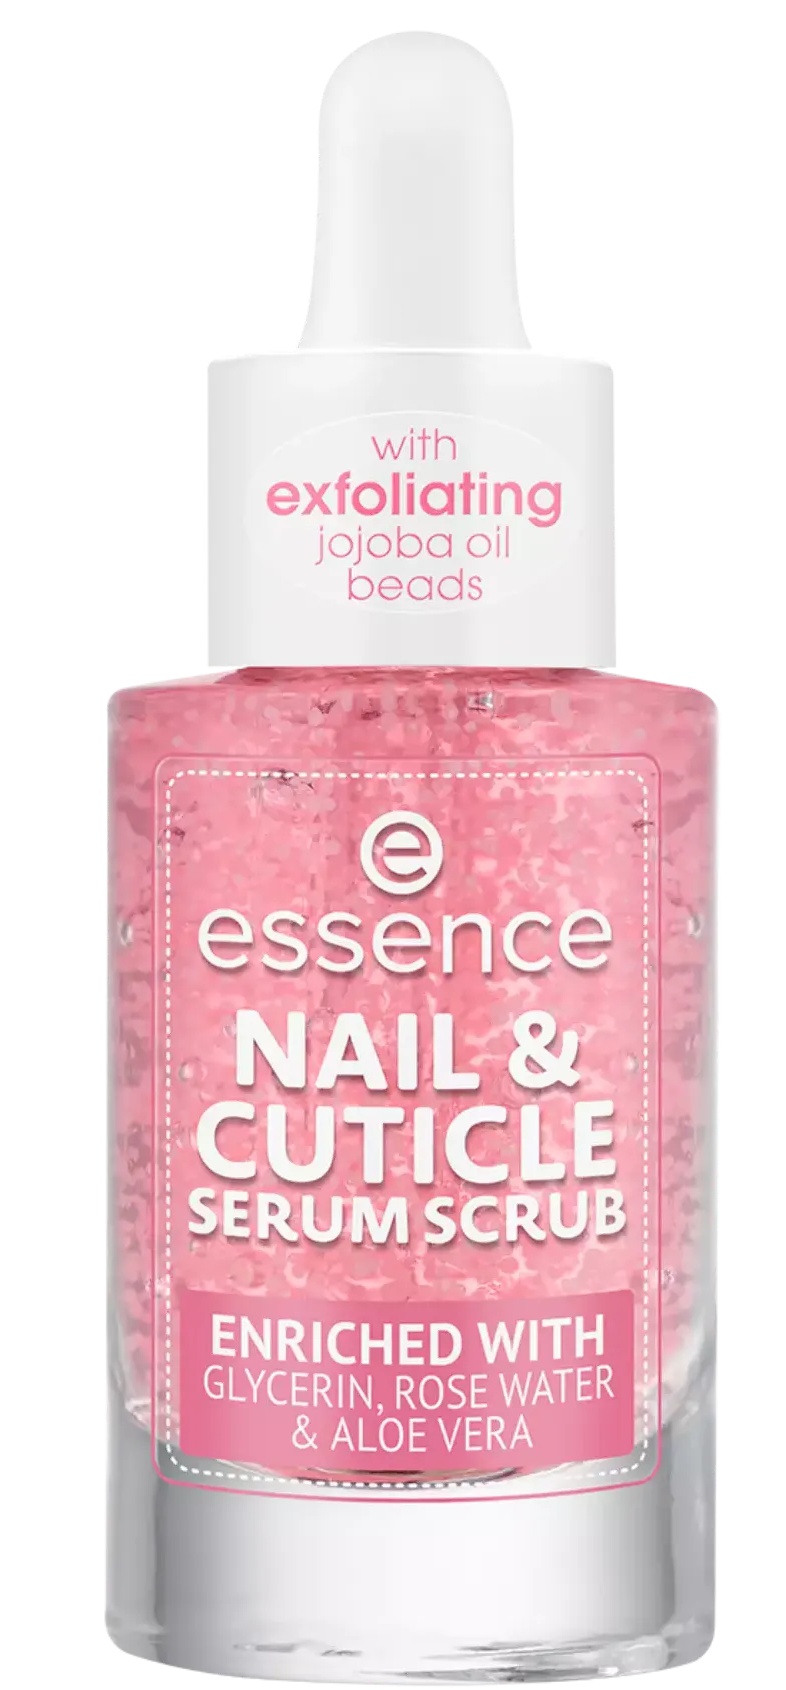 Essence Nail & Cuticle Serum Scrub